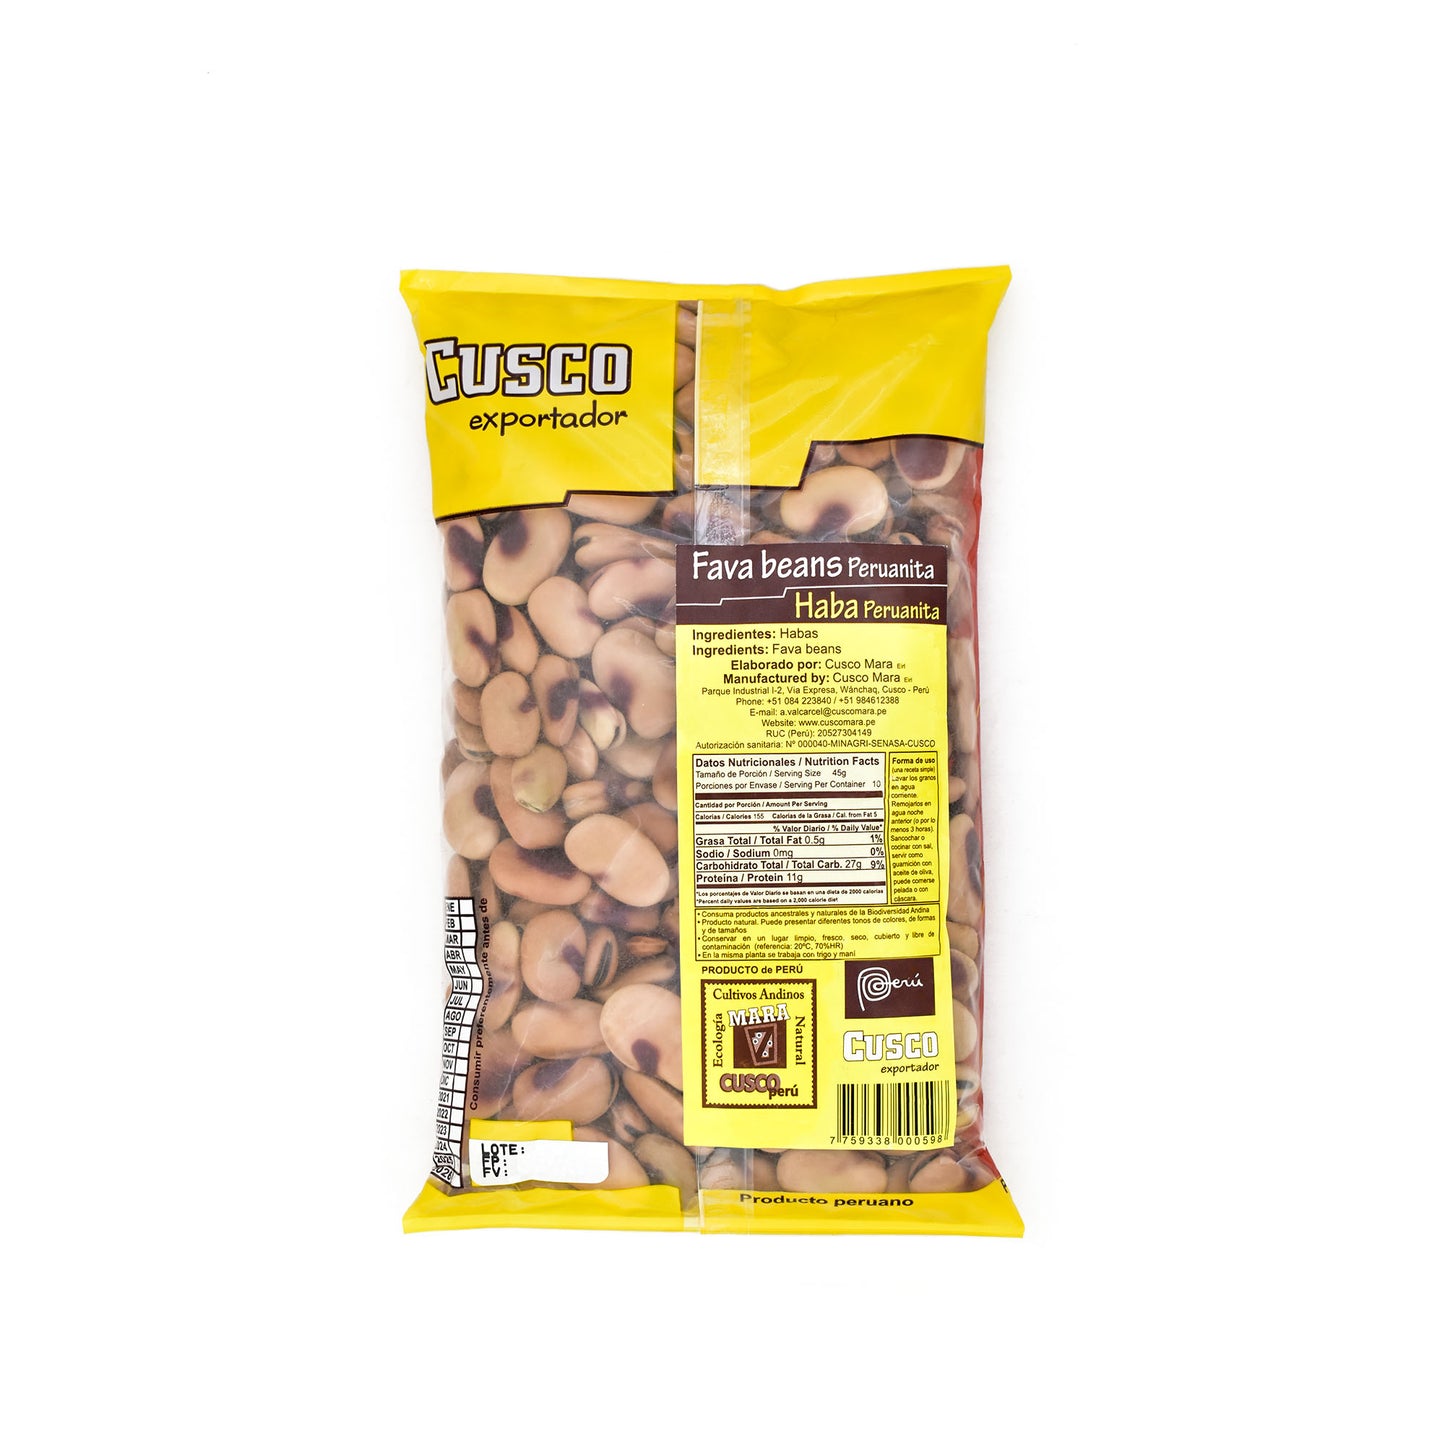 Dehydrated Peruvian broad bean x 454g